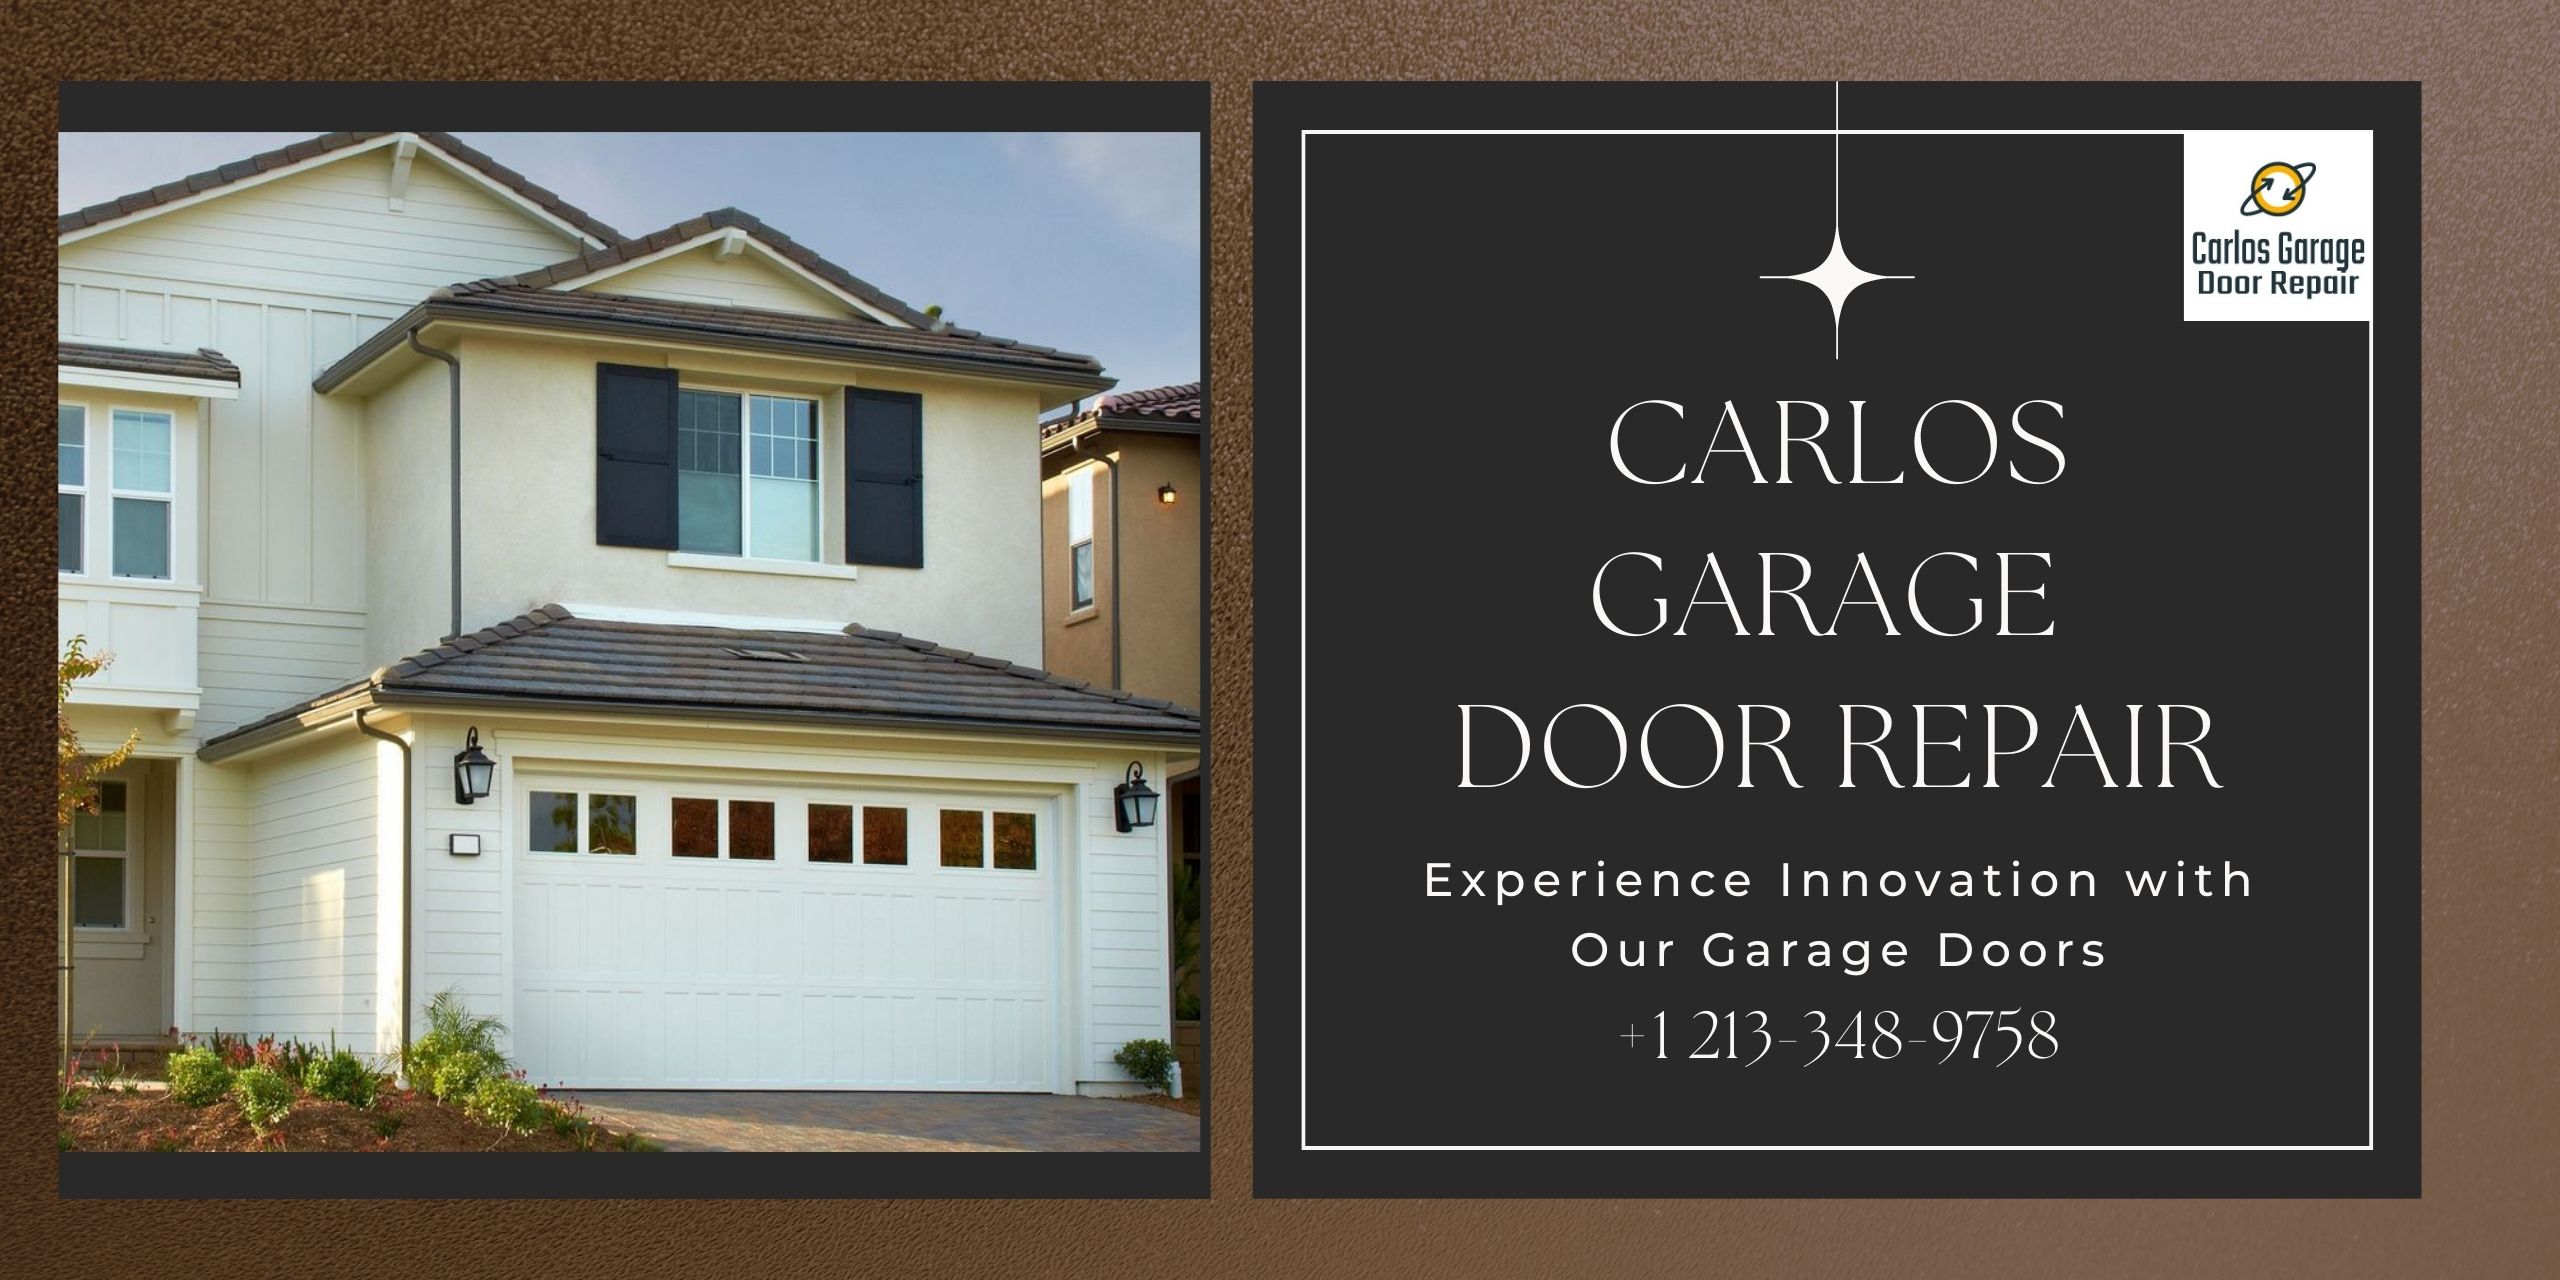 Carlos Garage Door Repair